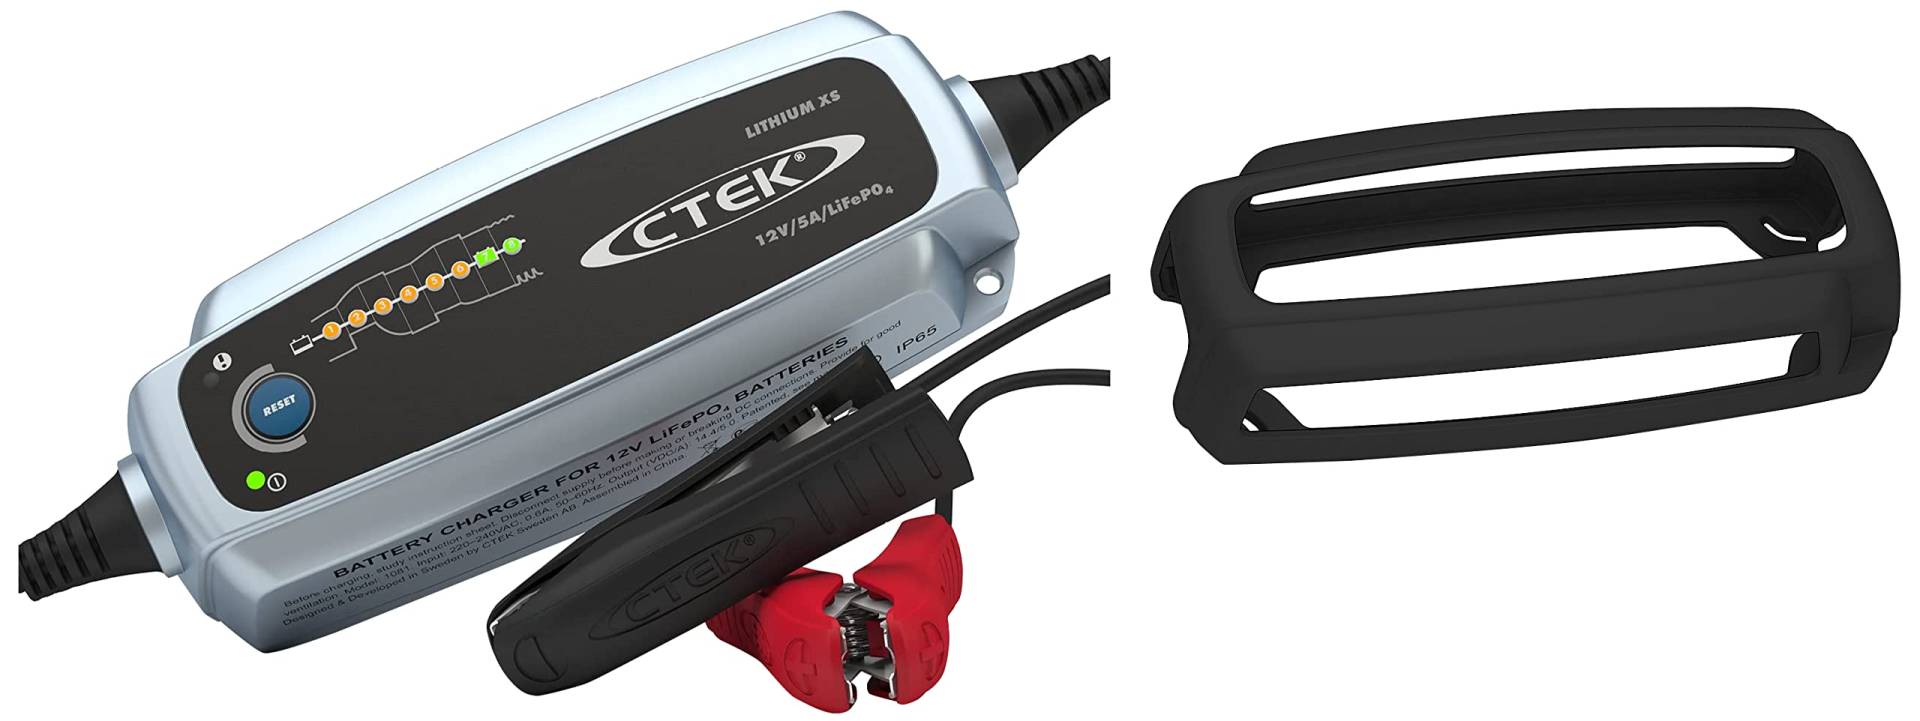 CTEK Lithium XS Multi-Funktions Batterieladegerät Mit 8-Stufen Ladeprogramm, 12V 5 Amp & Protect Bumper: Rutschfester Gummischutz für Ihr CTEK Batterieladegerät - Perfekter Schutz für Ihr Fahrzeug von CTEK